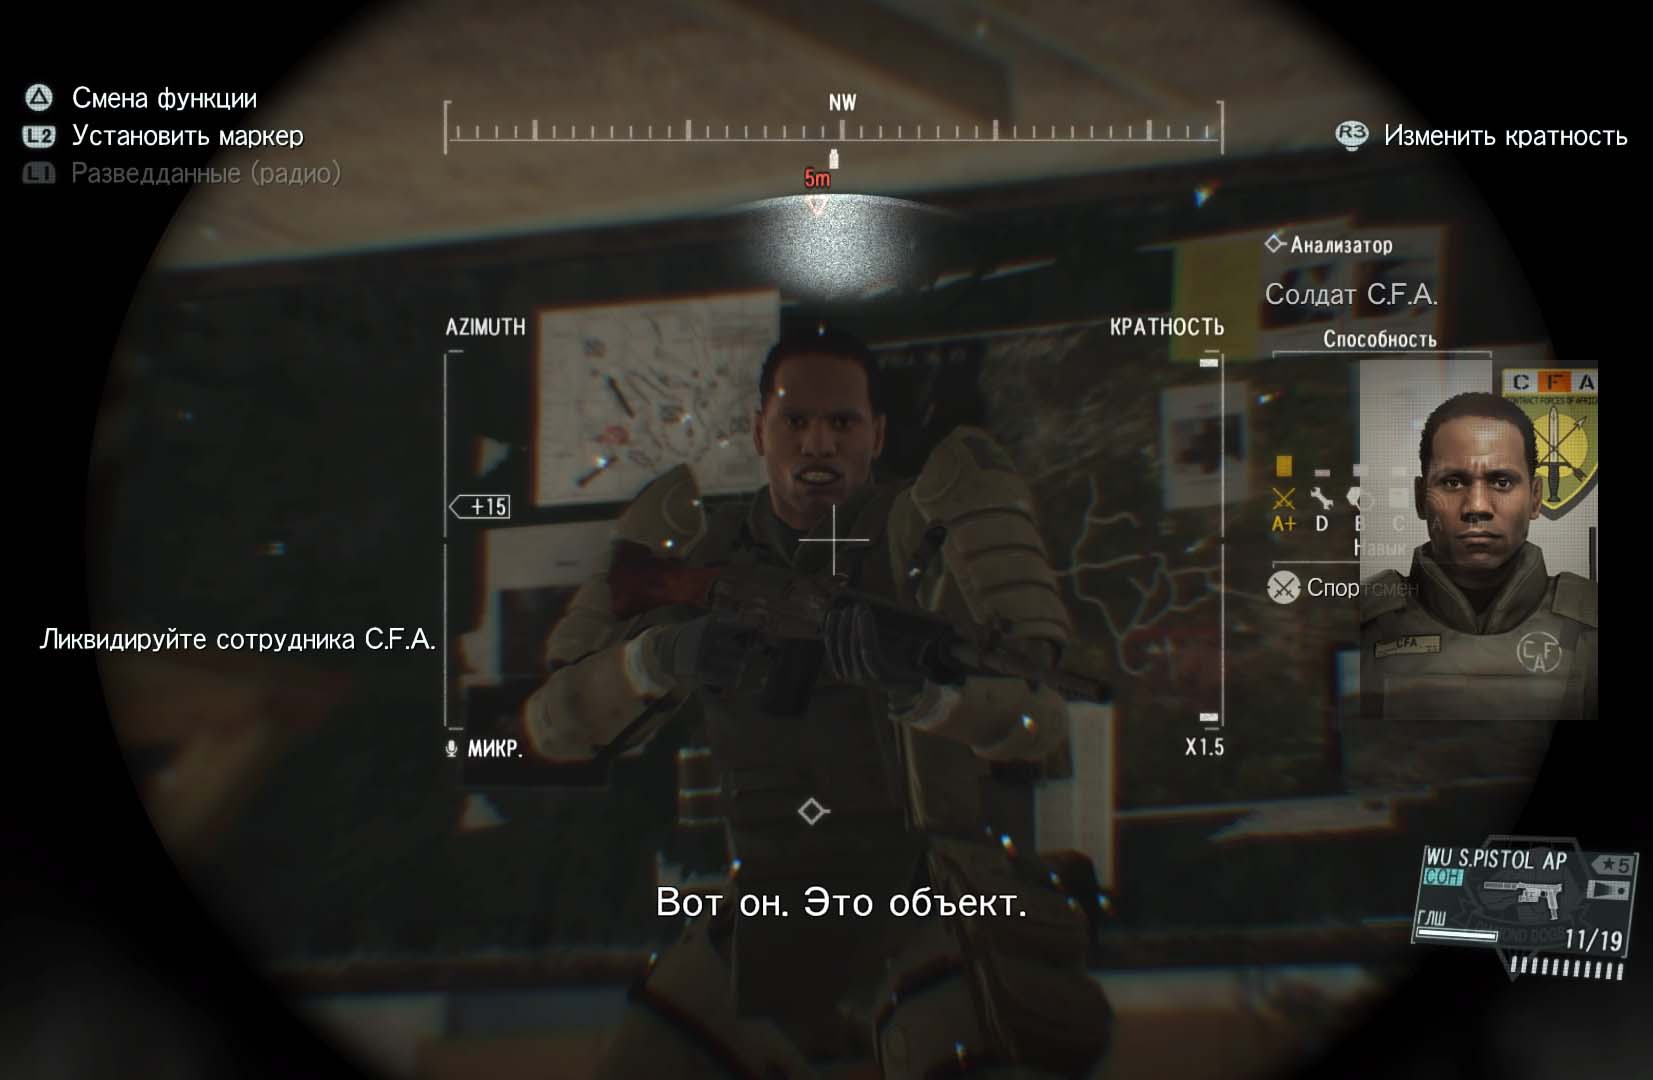 Metal Gear Solid V: The Phantom Pain Сотрудник C.F.A. обнаружен